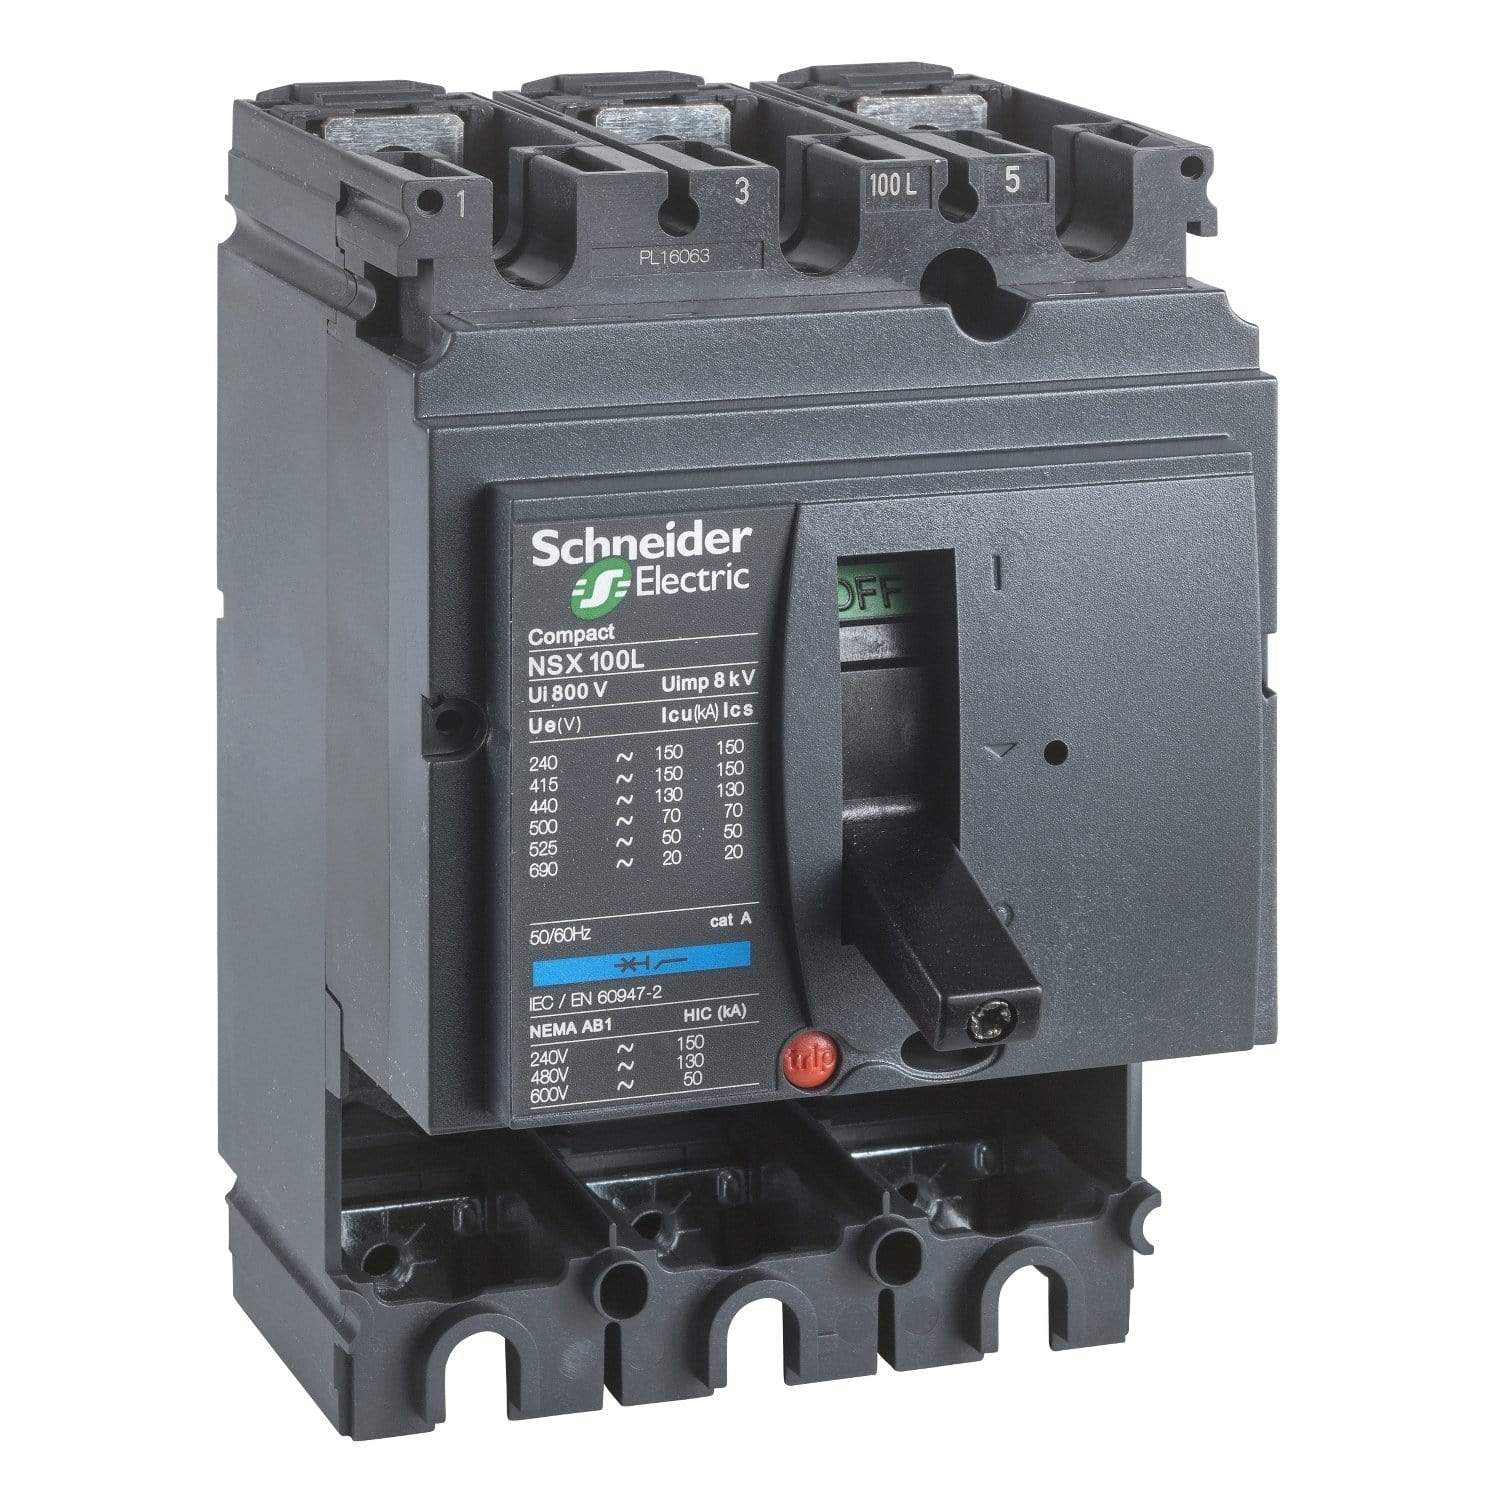 S7 Electrical Supplies SCHNEIDER NSX100L Basic Frame Circuit Breaker